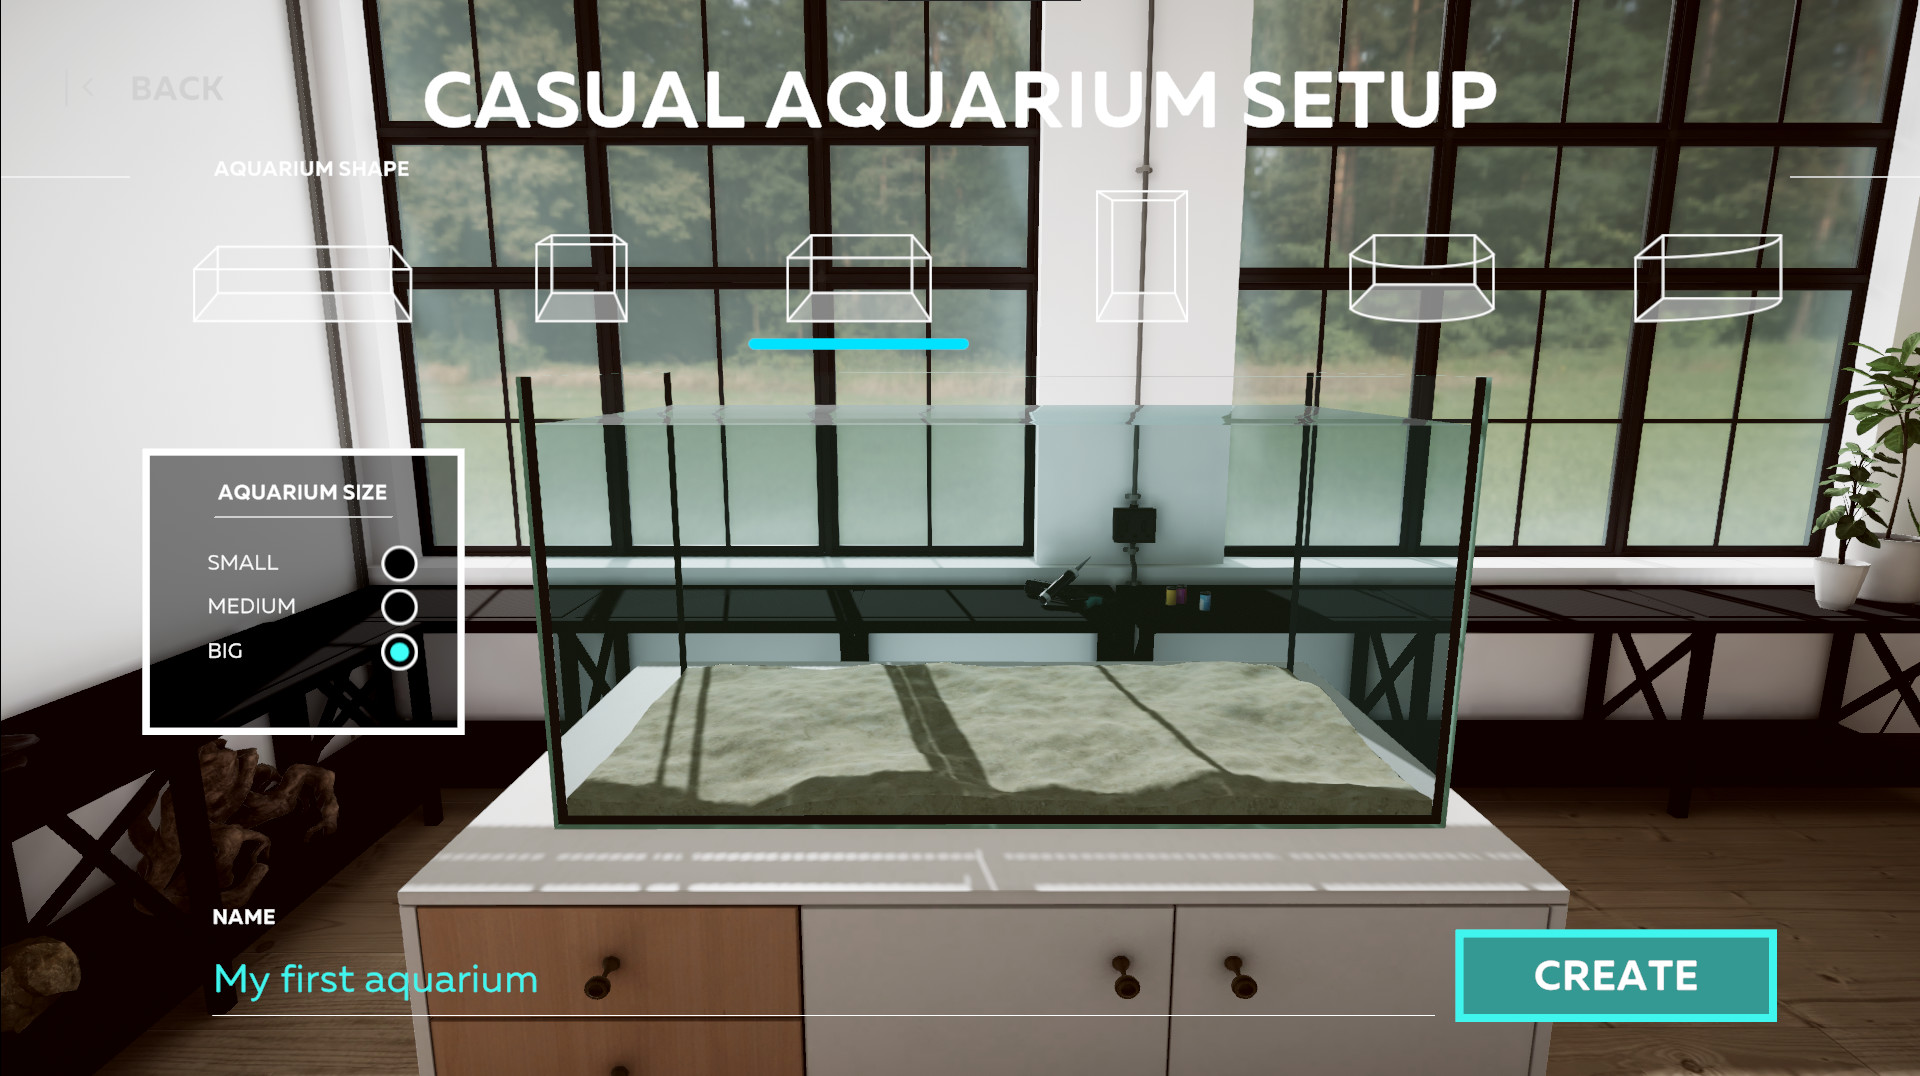 水族箱设计师/Aquarium Designer